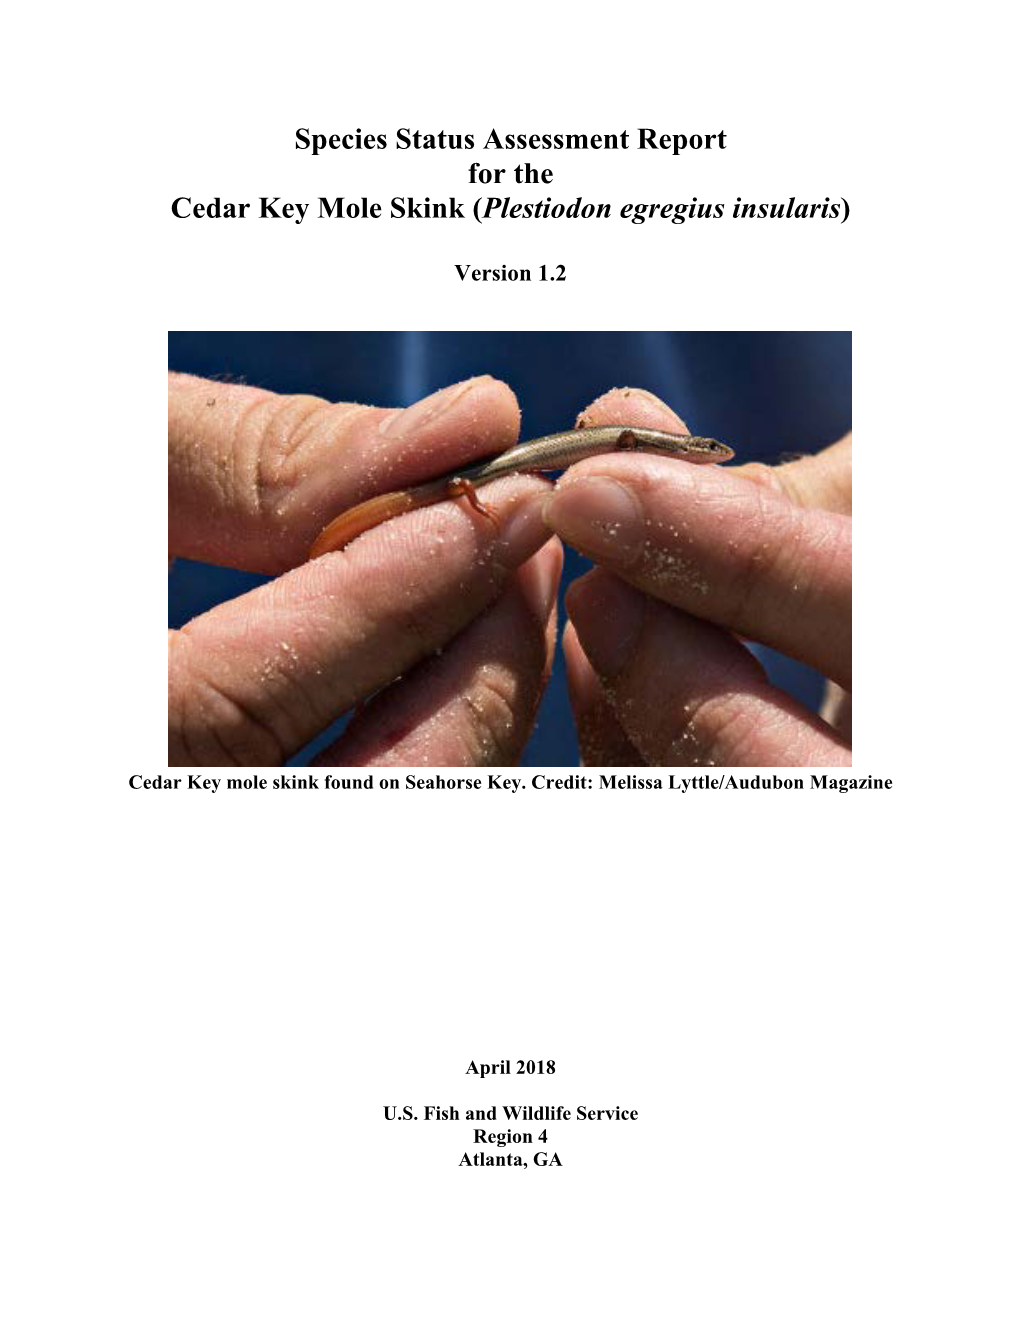 Species Status Assessment Report for the Cedar Key Mole Skink (Plestiodon Egregius Insularis)